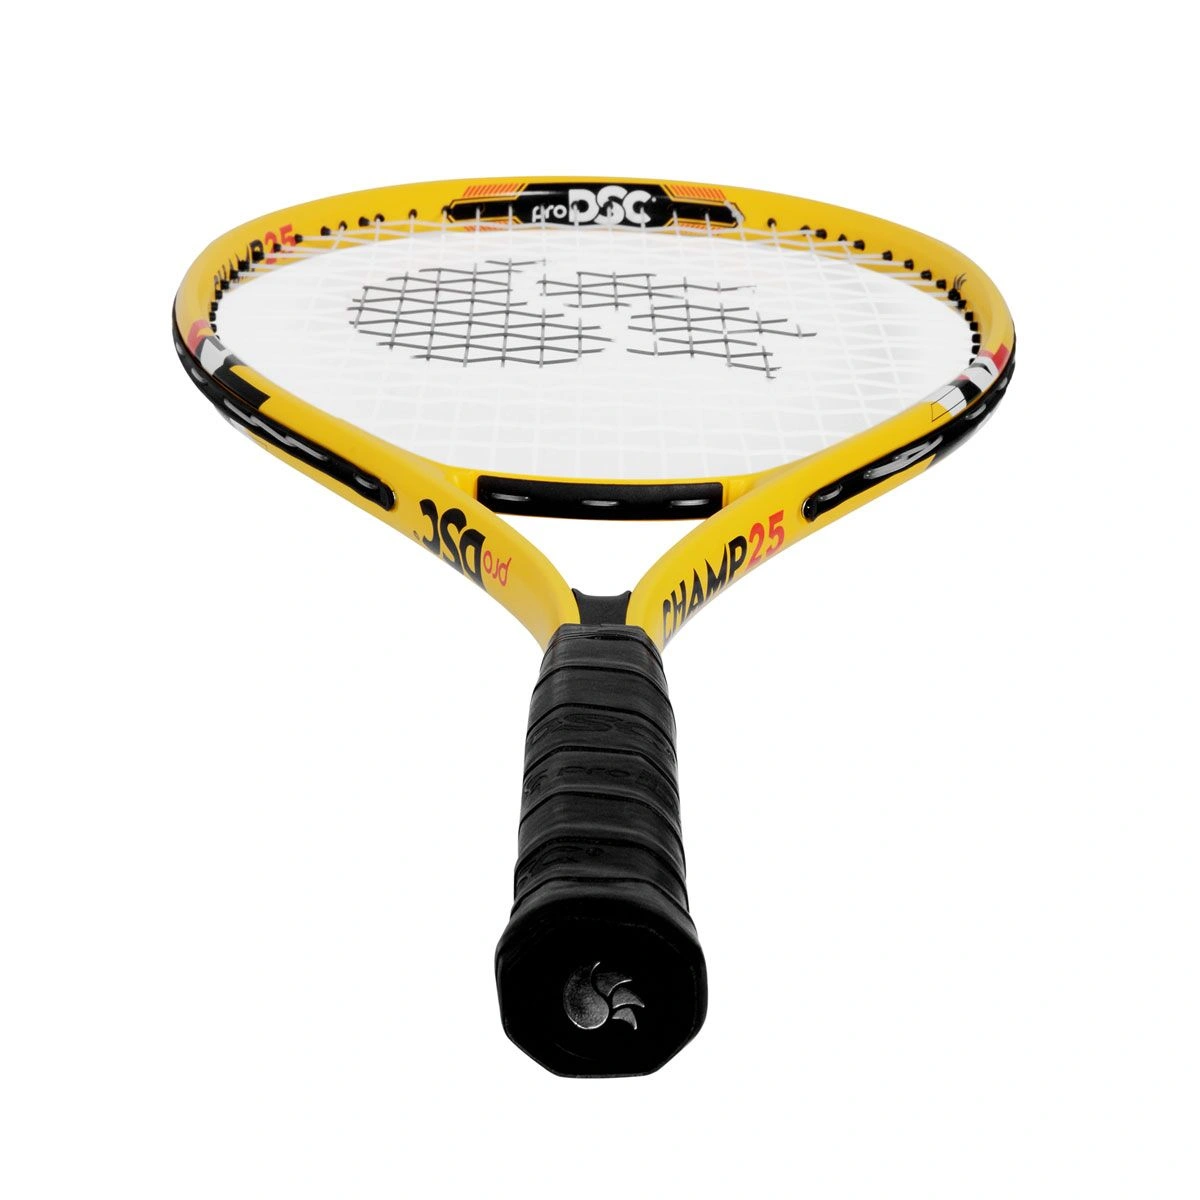 DSC Champ Aluminum Tennis Racquet: Lightweight, Durable, and Powerful Racquet for Beginners and Junior Players-YELLOW-25-3